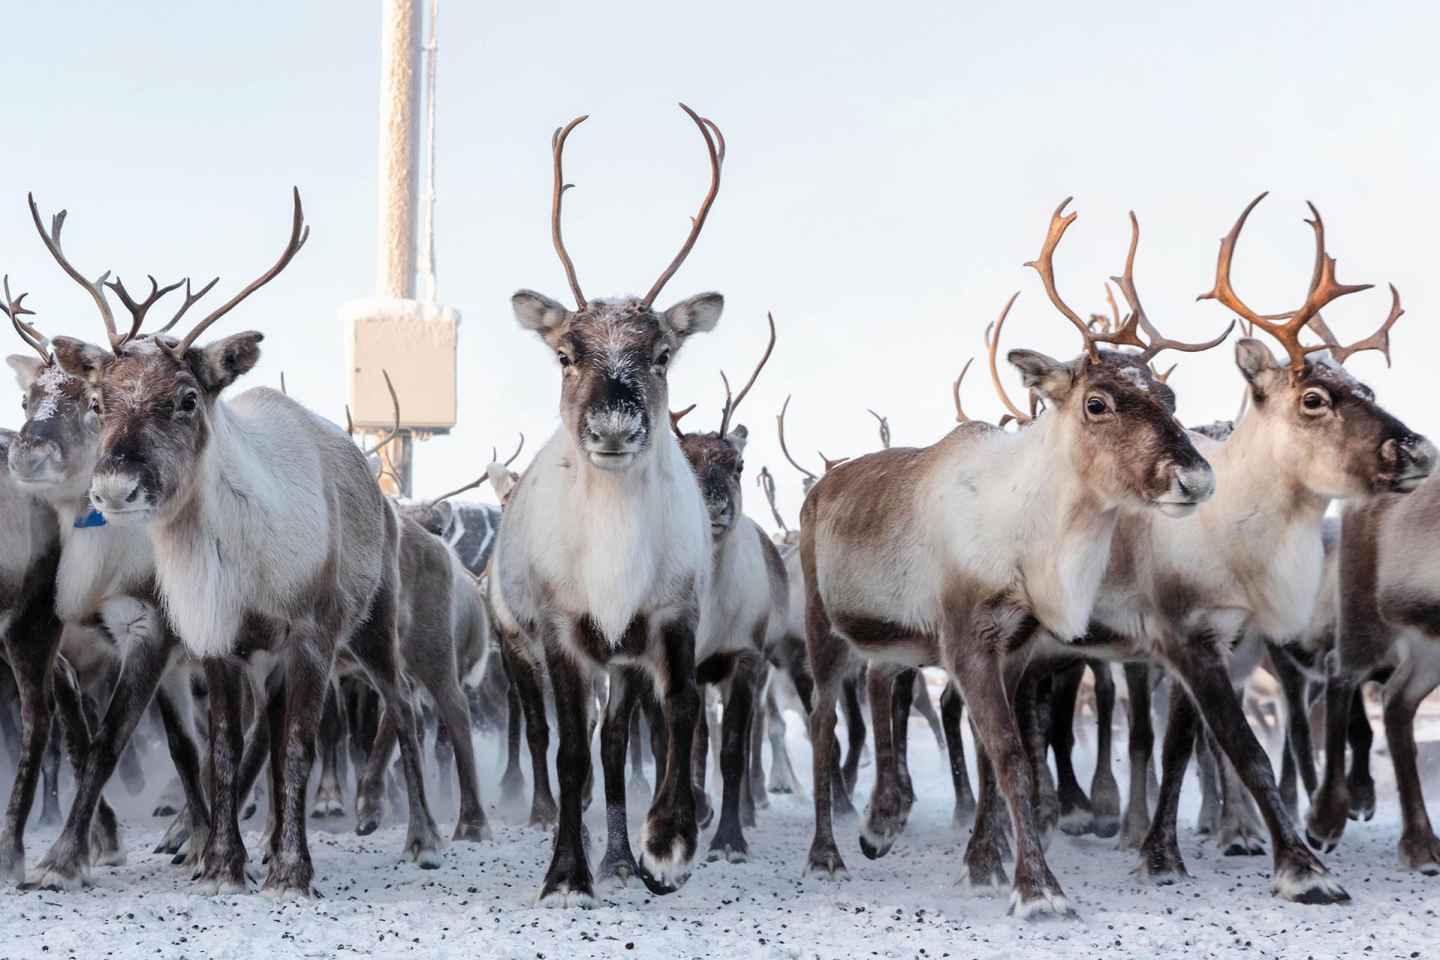 From Abisko/Björkliden: Jukkasjärvi Sami and Reindeer Tour